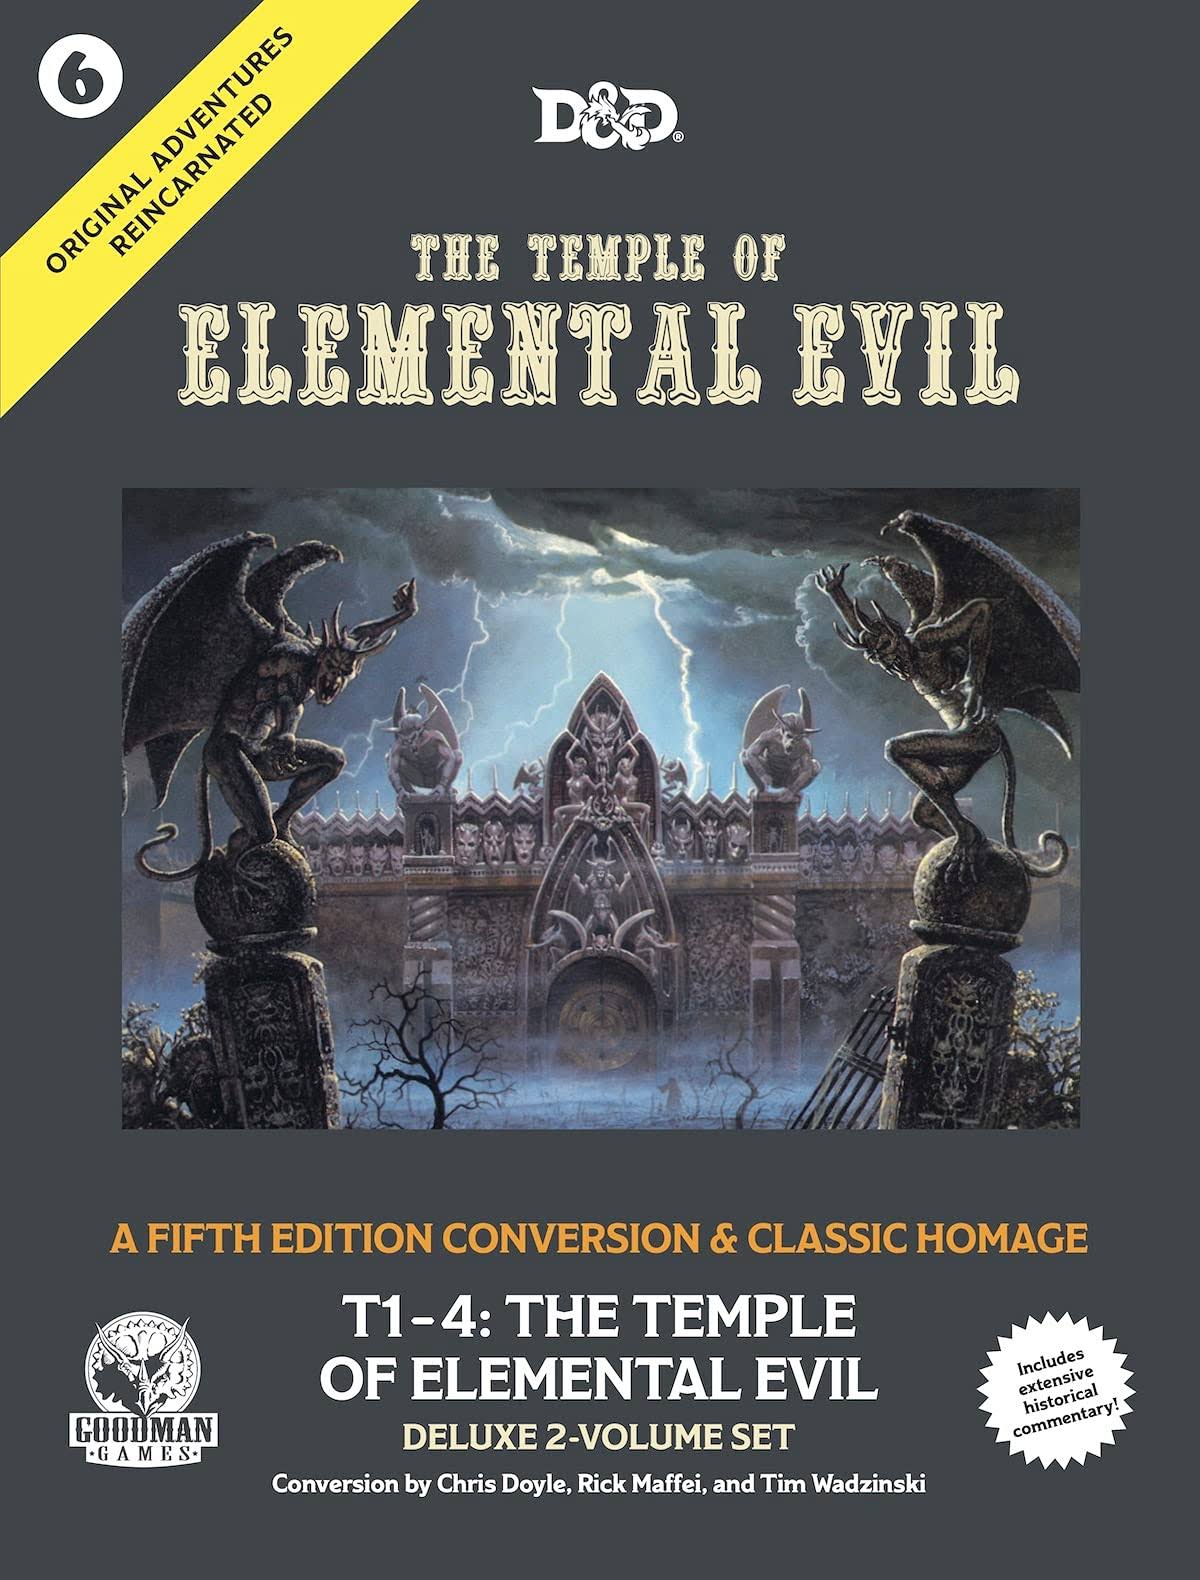 Original Adventures Reincarnated #6 - The Temple of Elemental Evil